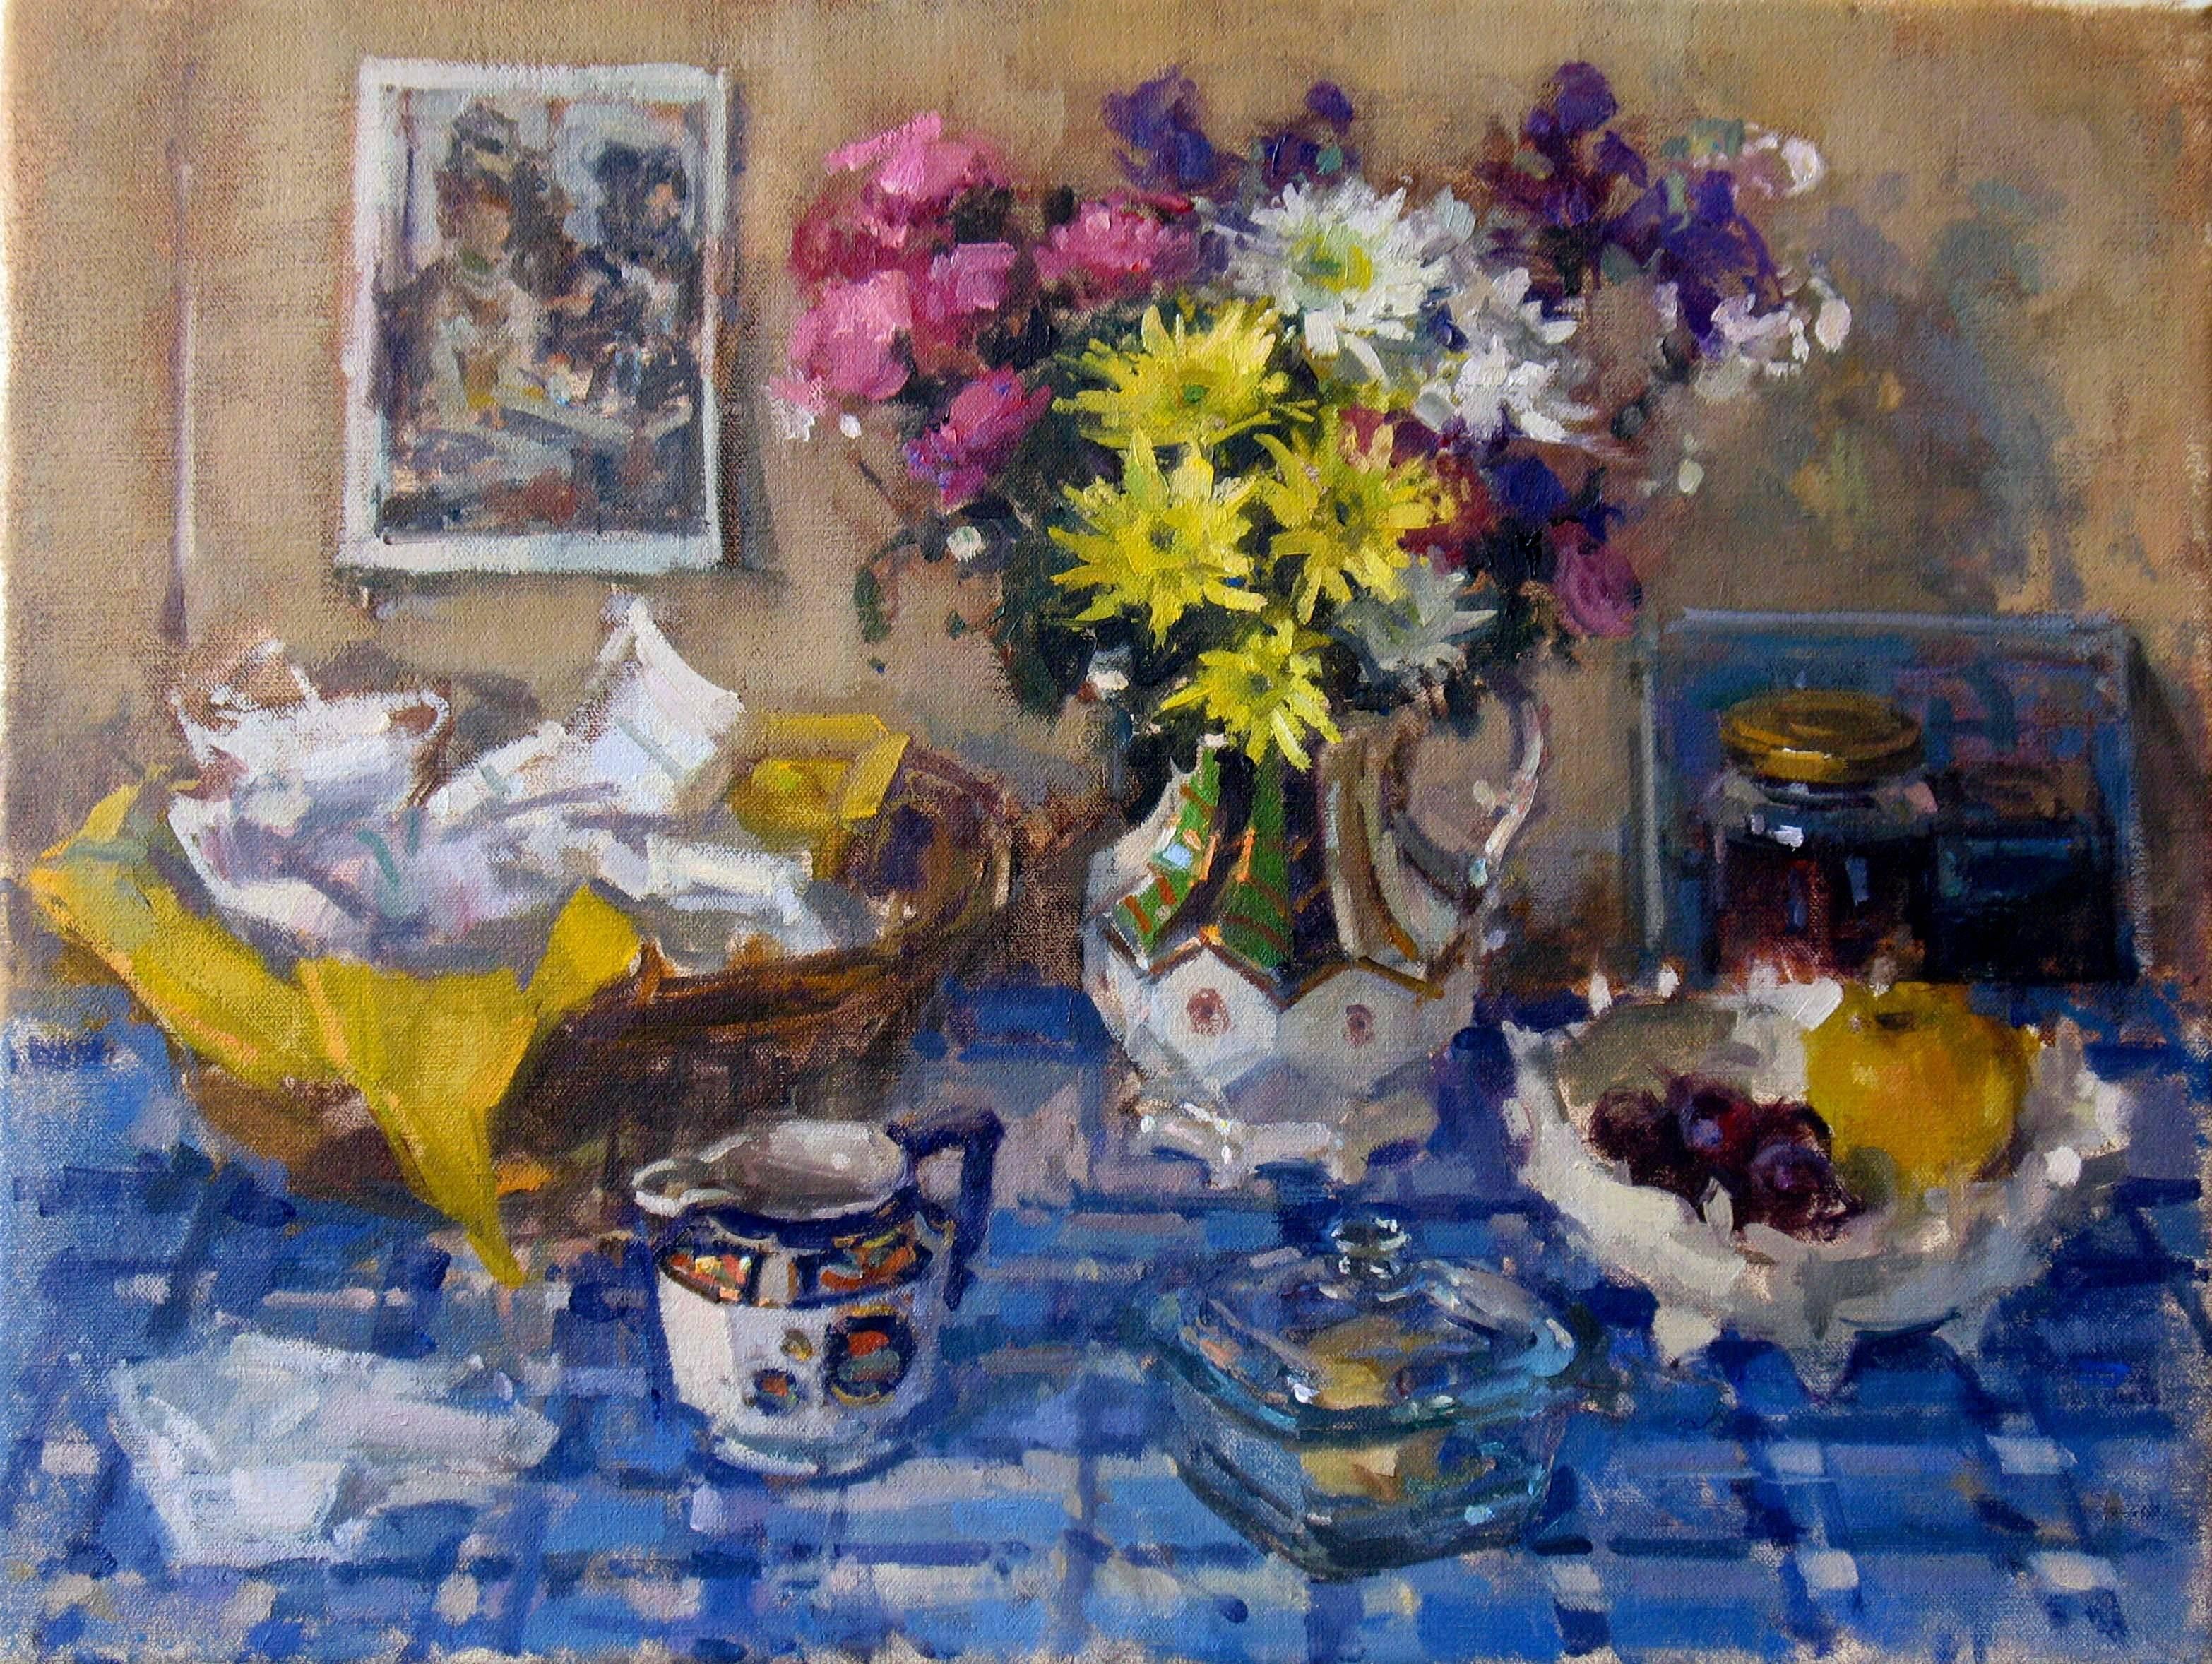 John D Martin RBA Landscape Painting - Breakfast Table with Flowers - still life food oil artwork contemporary modern 